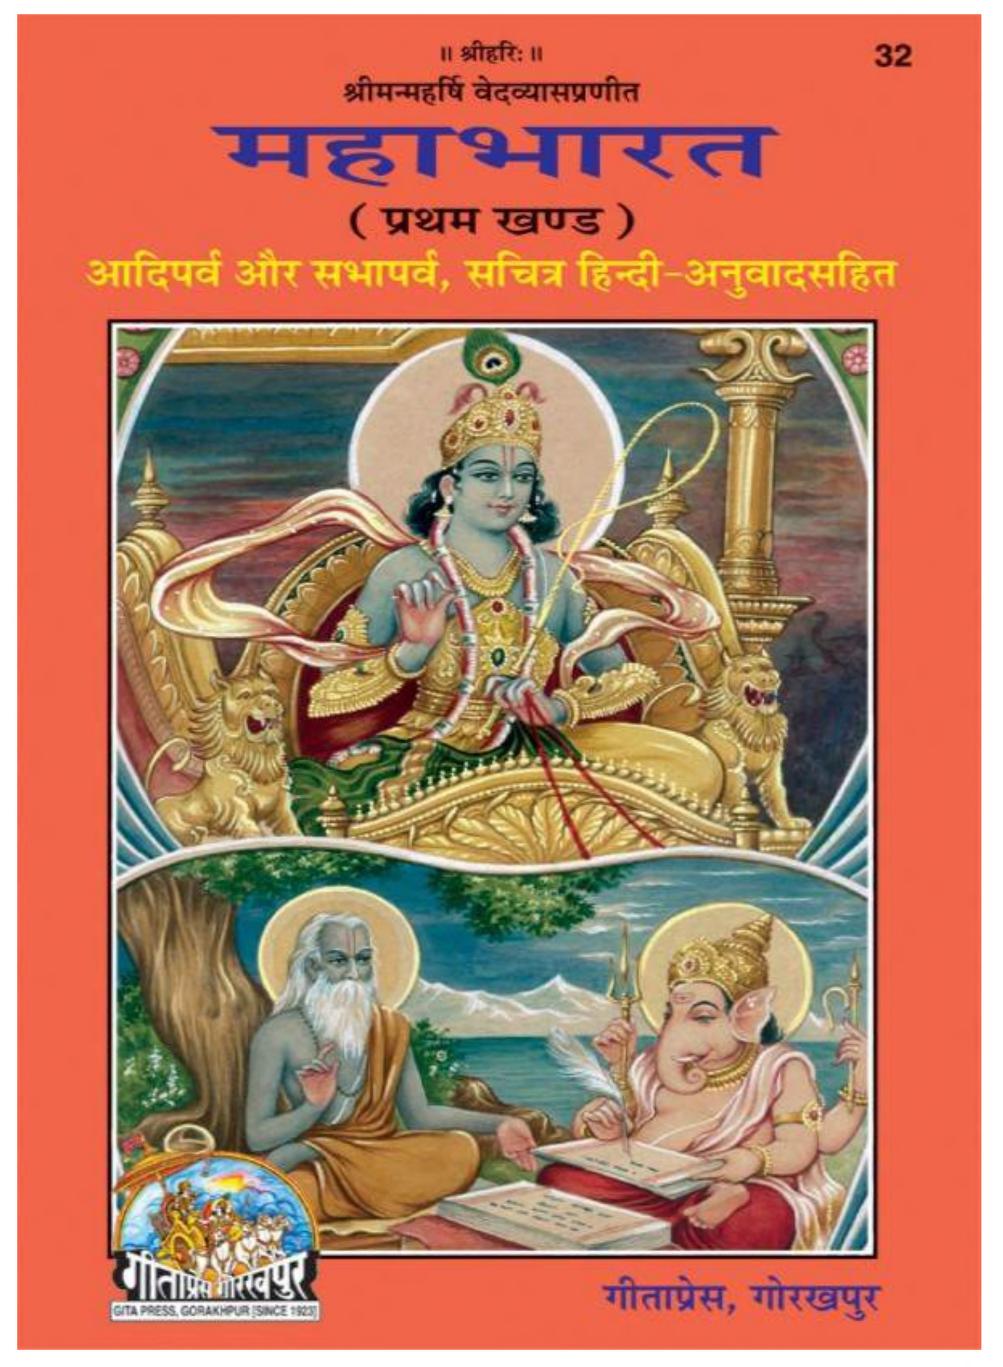 Mahabharata by Gita Press in Hindi and sanskrit : Free Download, Borrow,  and Streaming : Internet Archive